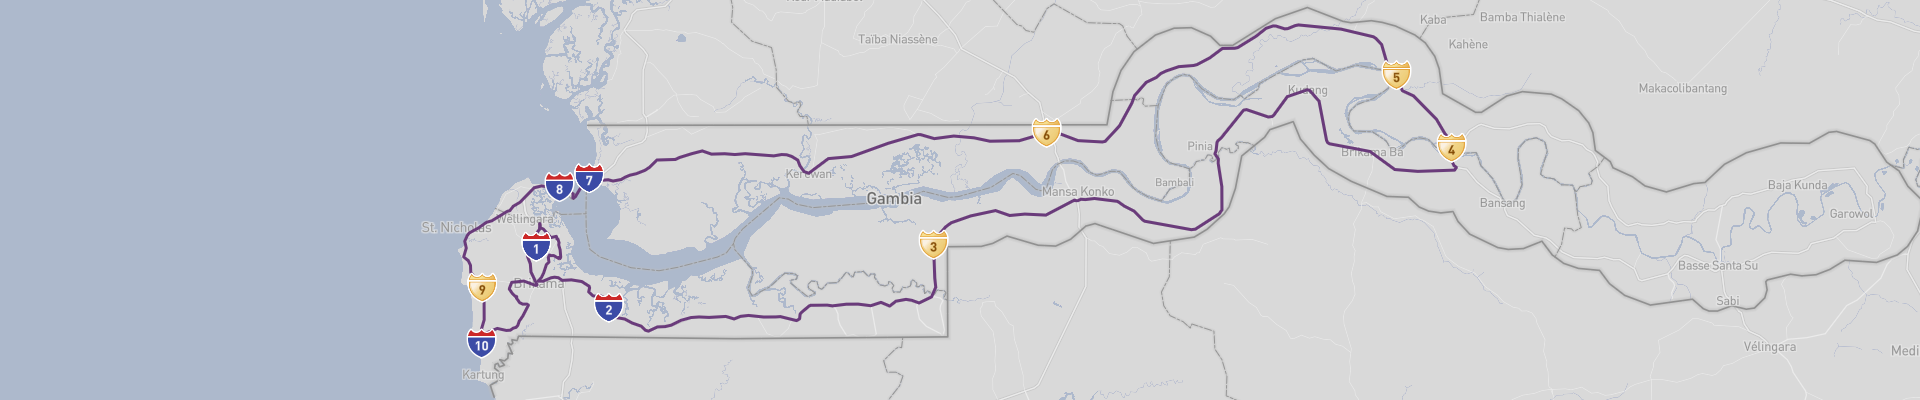 Gambia Roadtrip